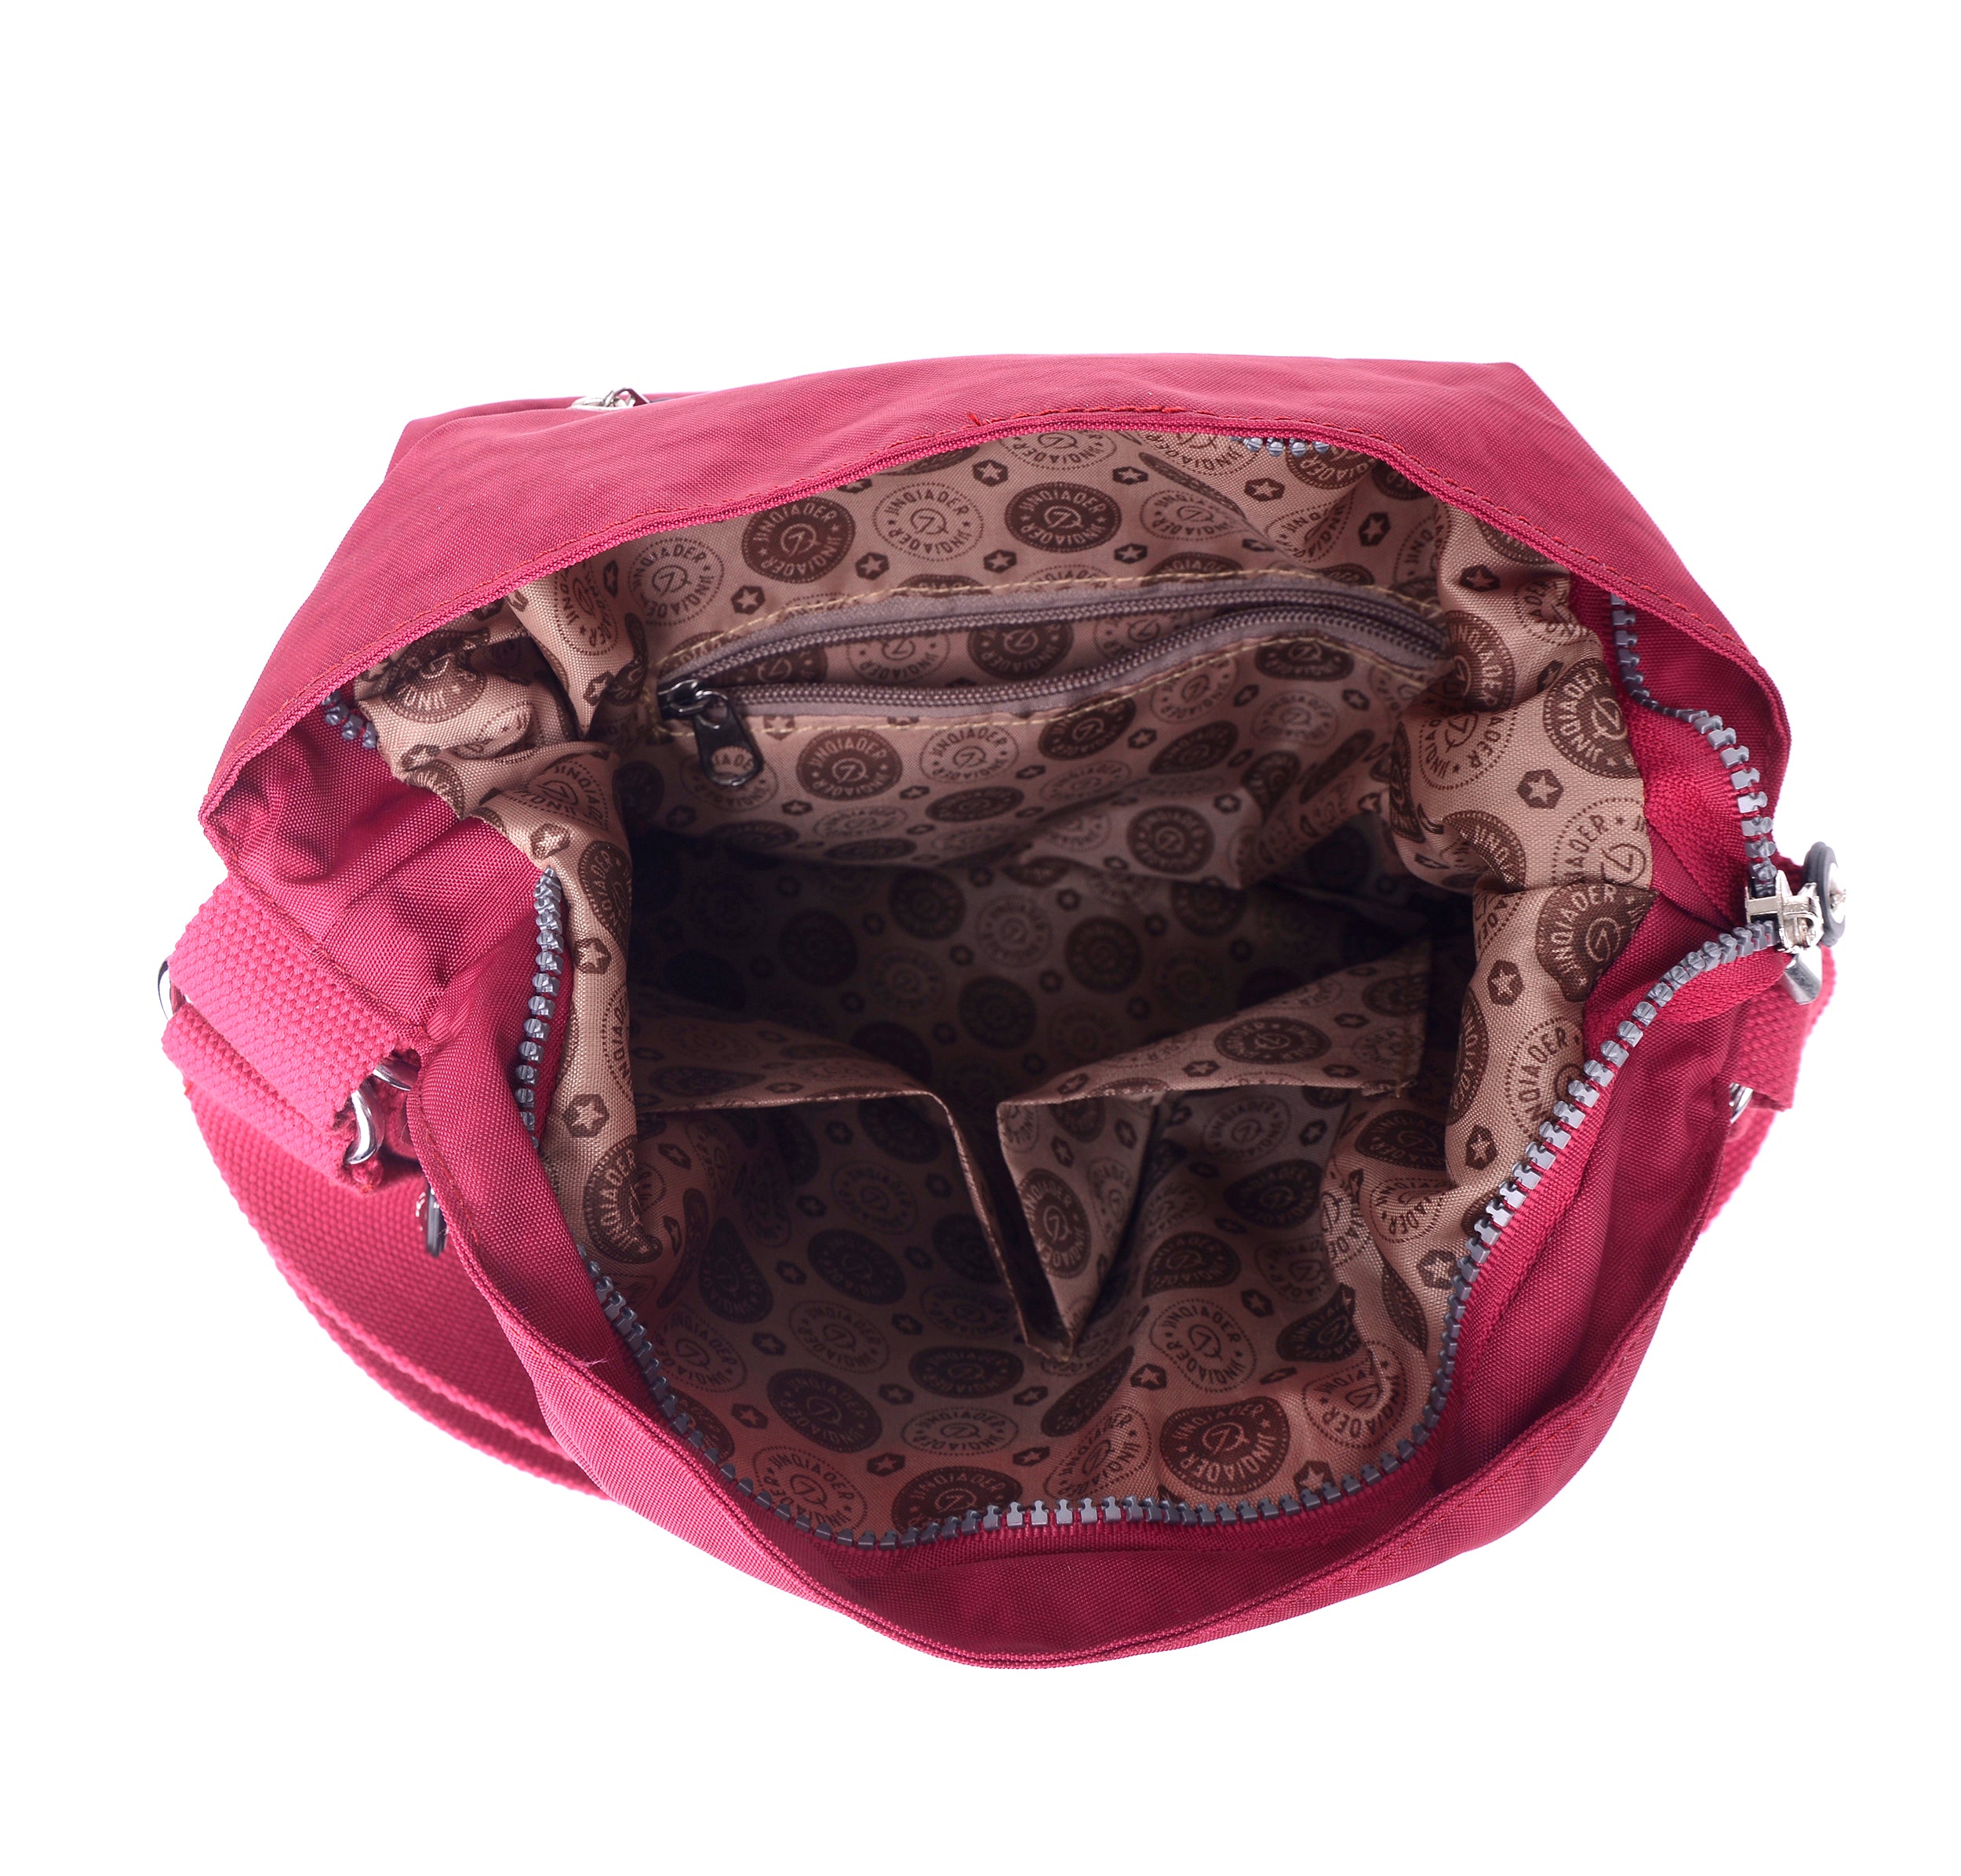 Luxury Handbags Women Bags Designer Waterproof Bylon Cloth Crossbody Bags For Women 2021 Large Capacity Lady Shoulder Bag Tote